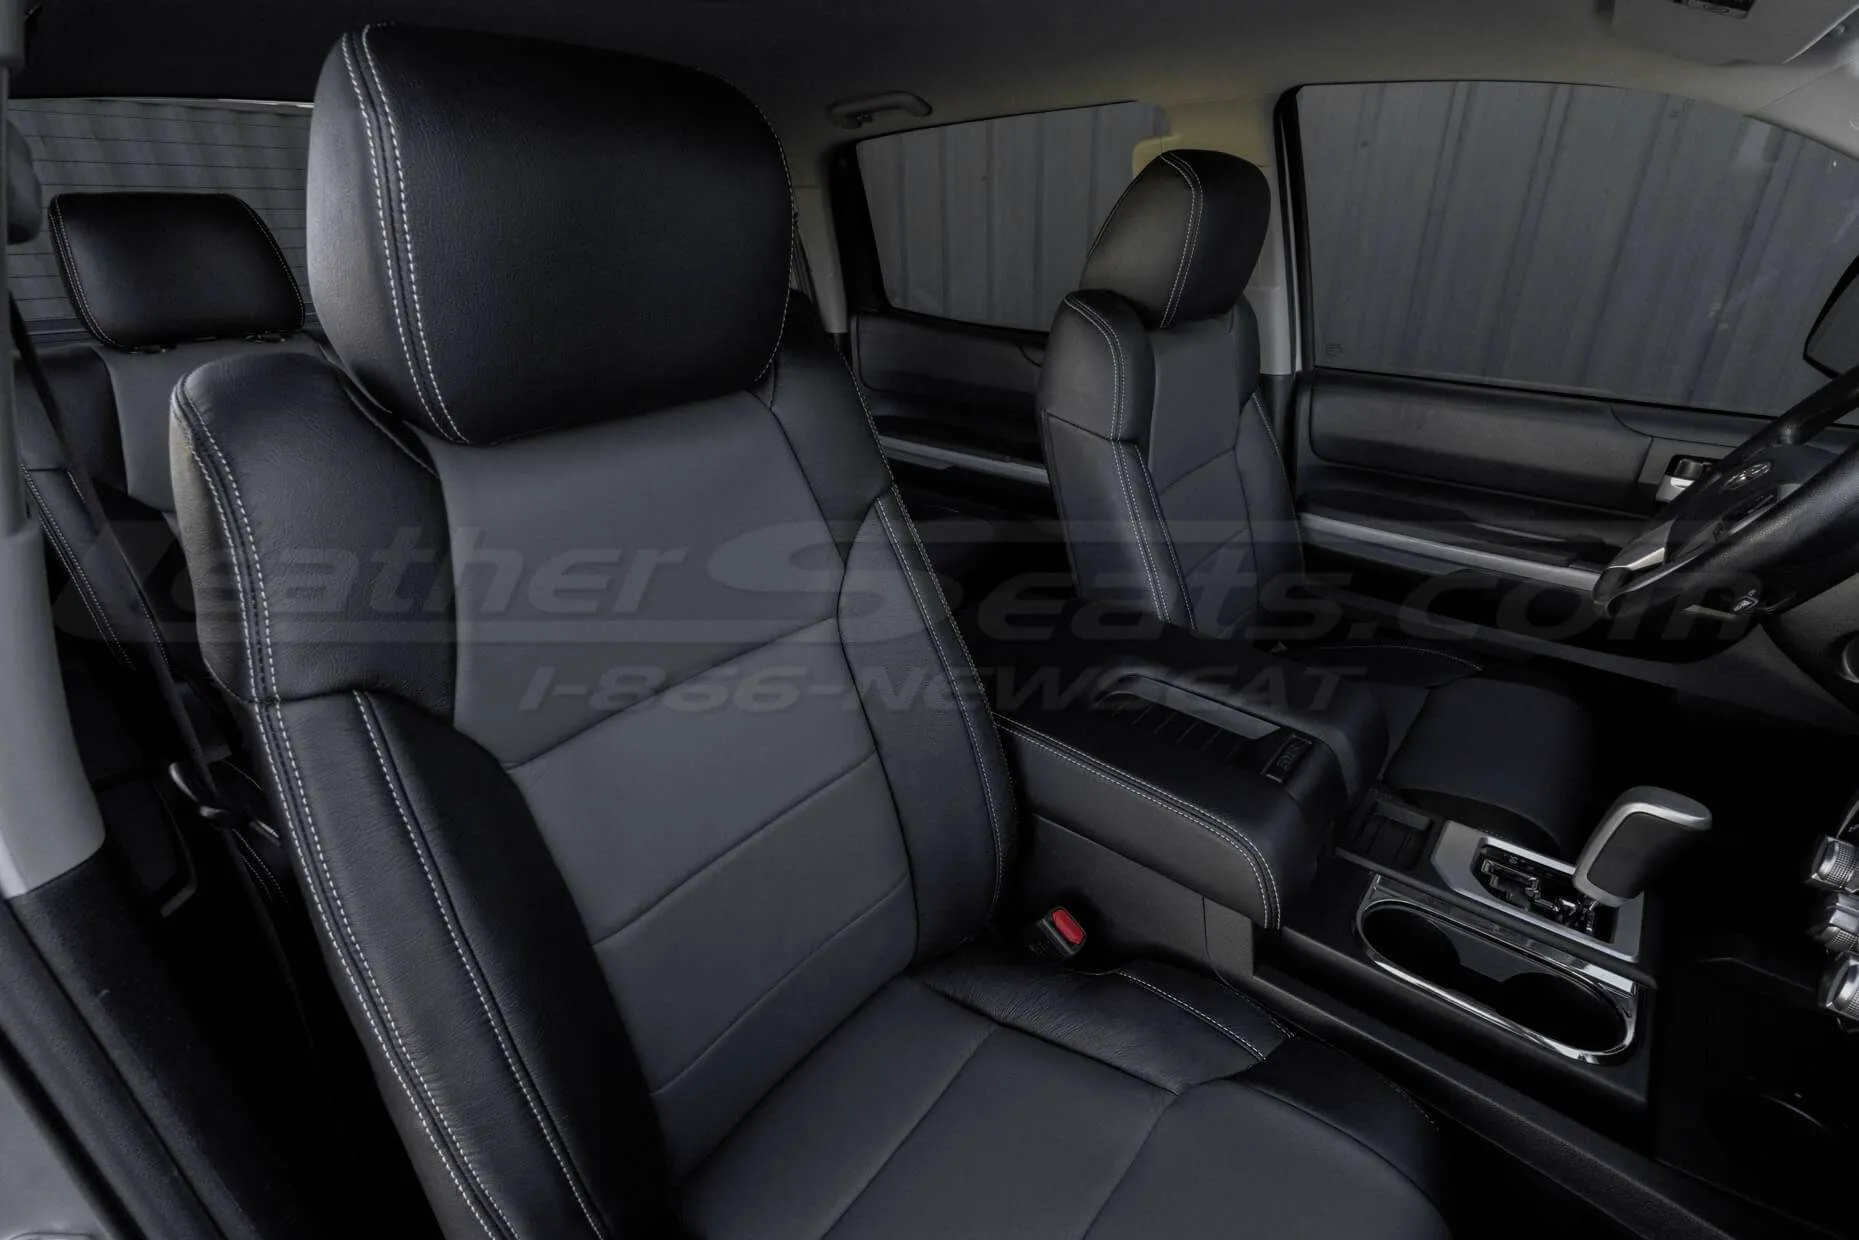 Front backrest section & headrest of front passenger seat